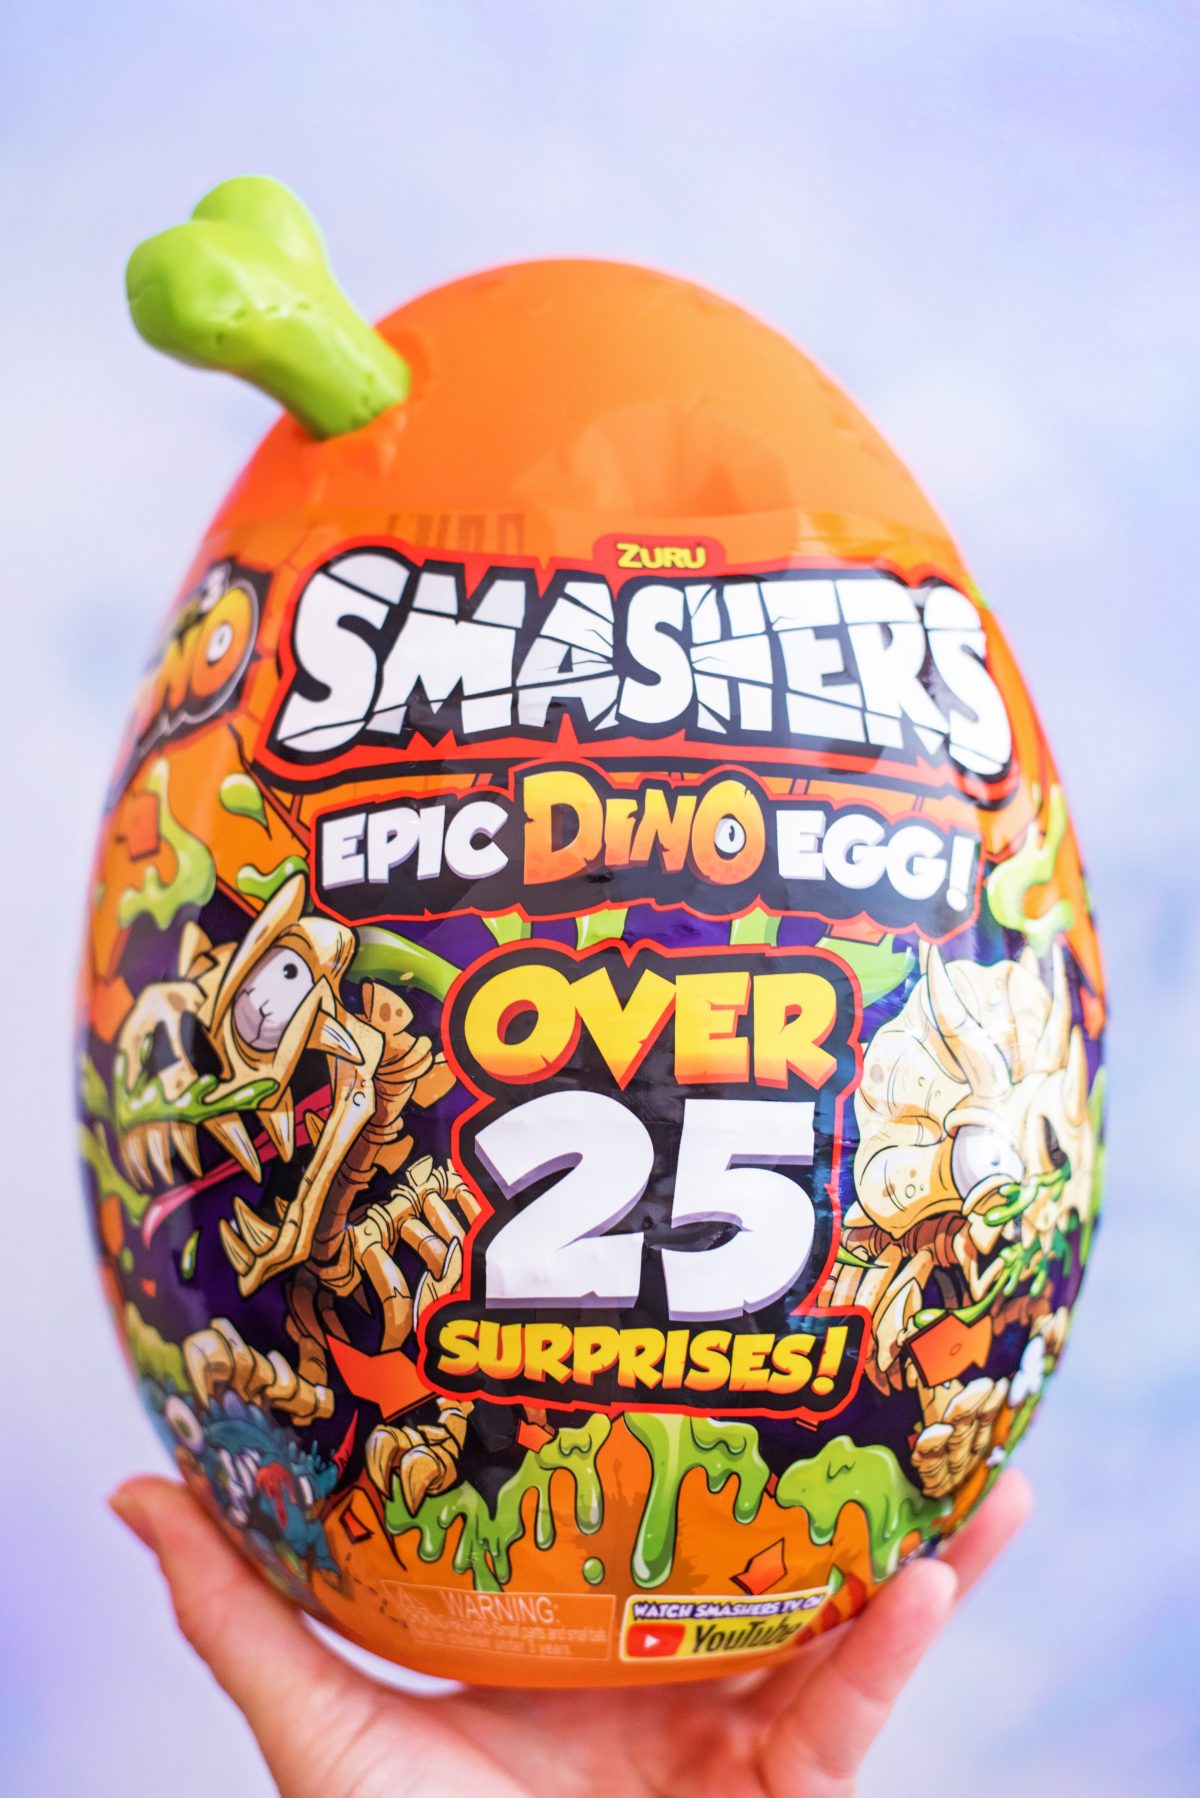 Zuru Smashers Epic Dino Egg